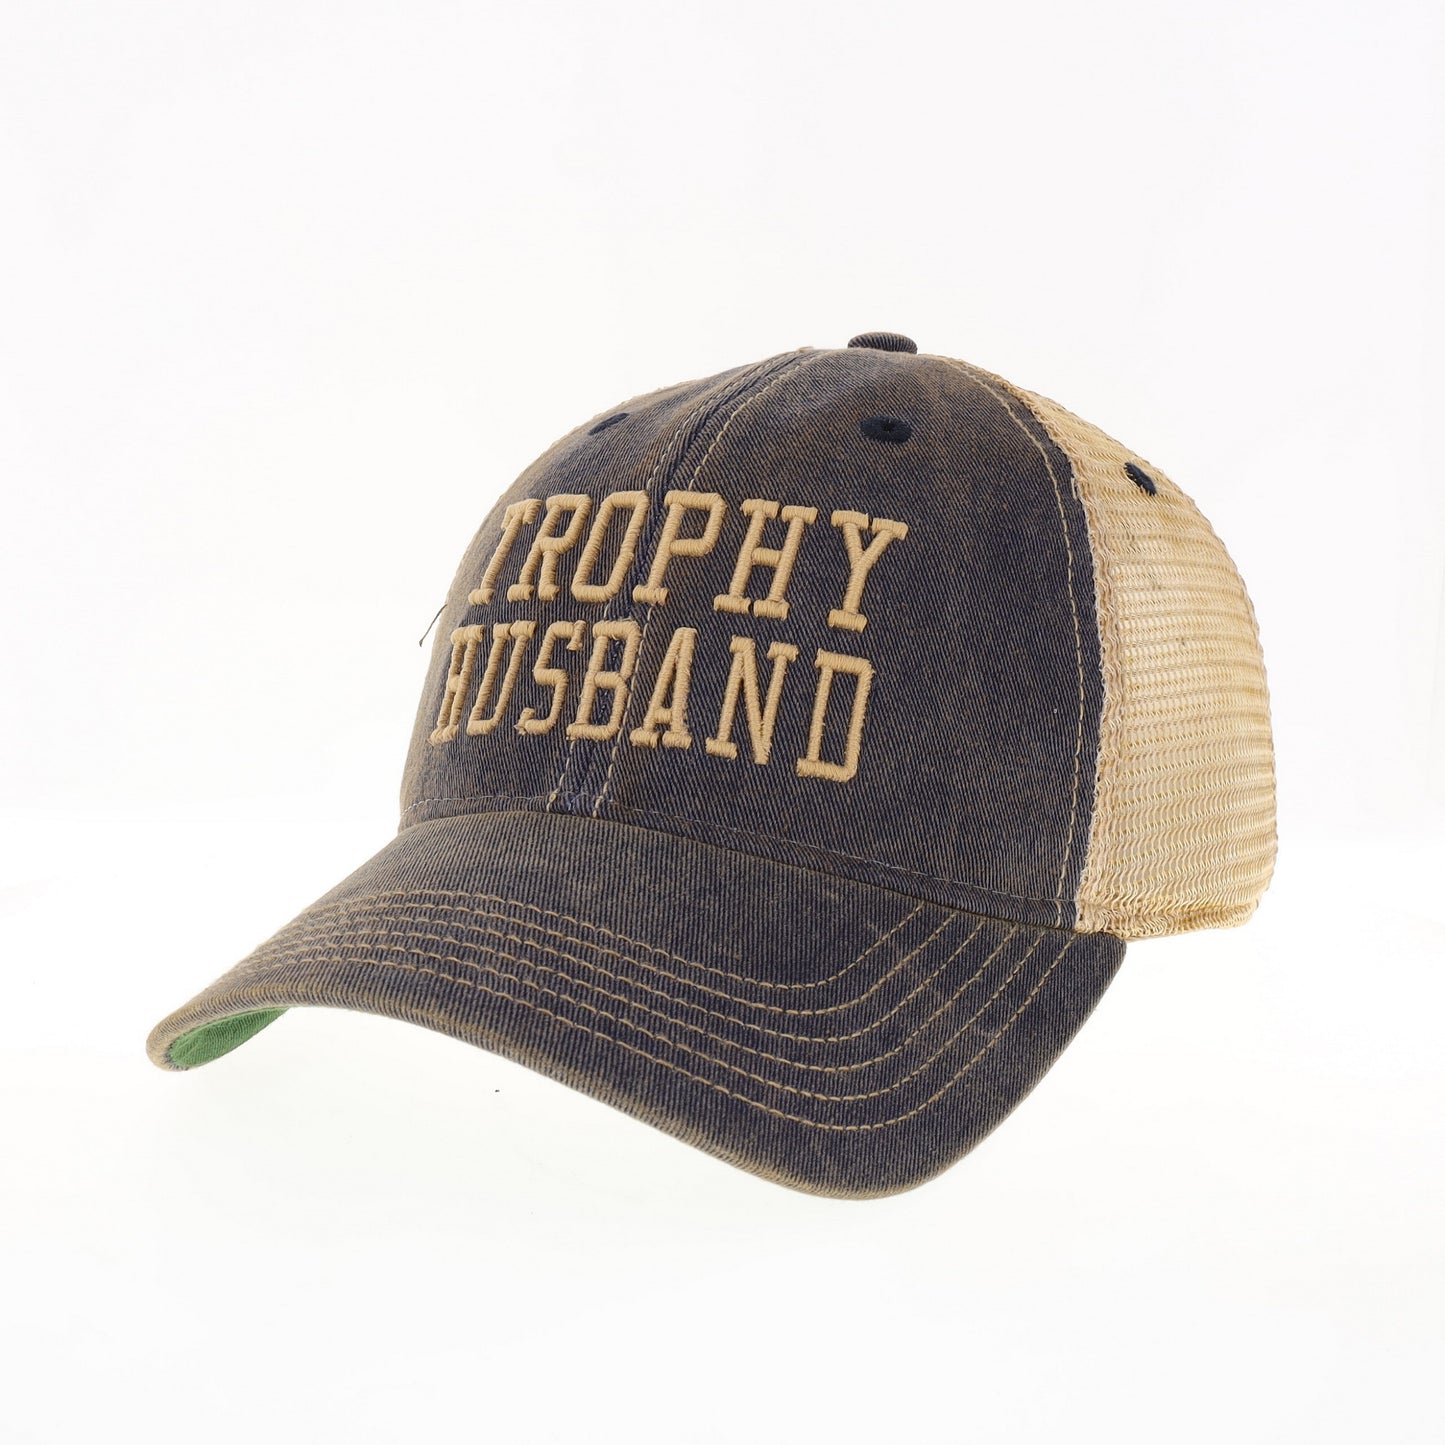 TROPHY HUSBAND TRUCKER HAT - NAVY